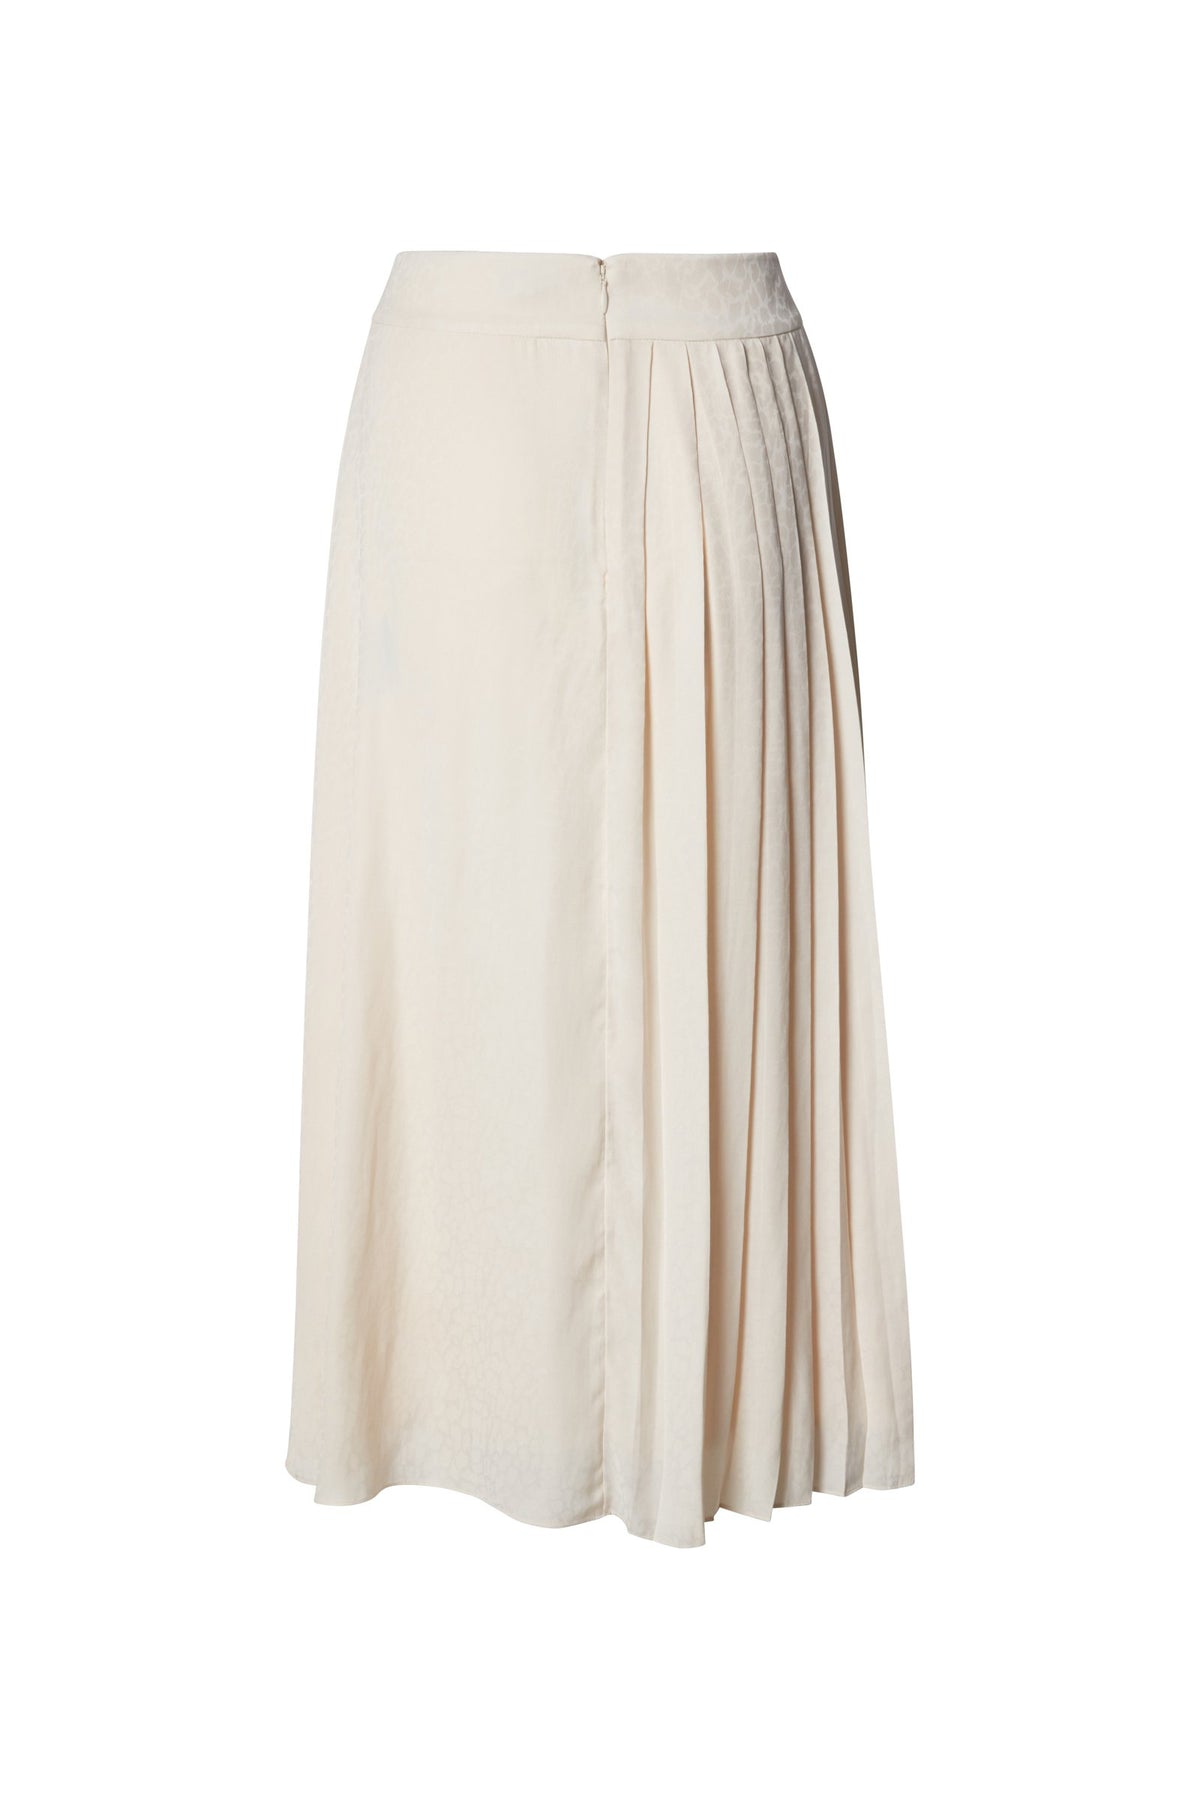 Cameron High Waist Midi Skirt in Vintage White